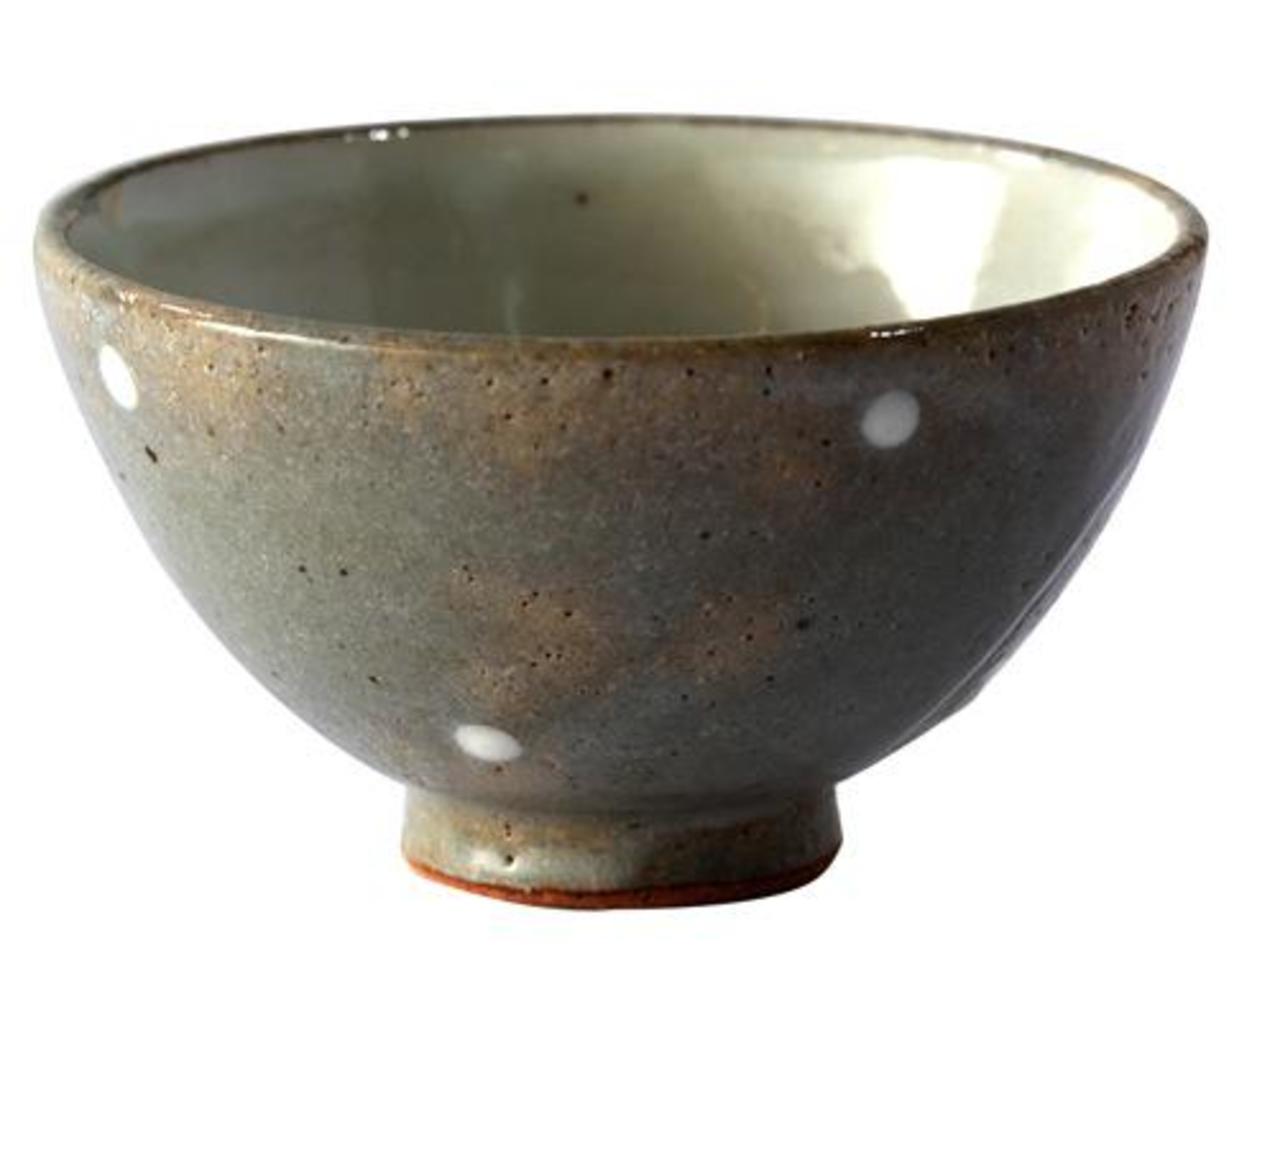 How much do we love this bowl by artist Hondaya Syokiten #ceramics #Japan  http://bit.ly/1IkBUHU http://t.co/MNidBkGse5